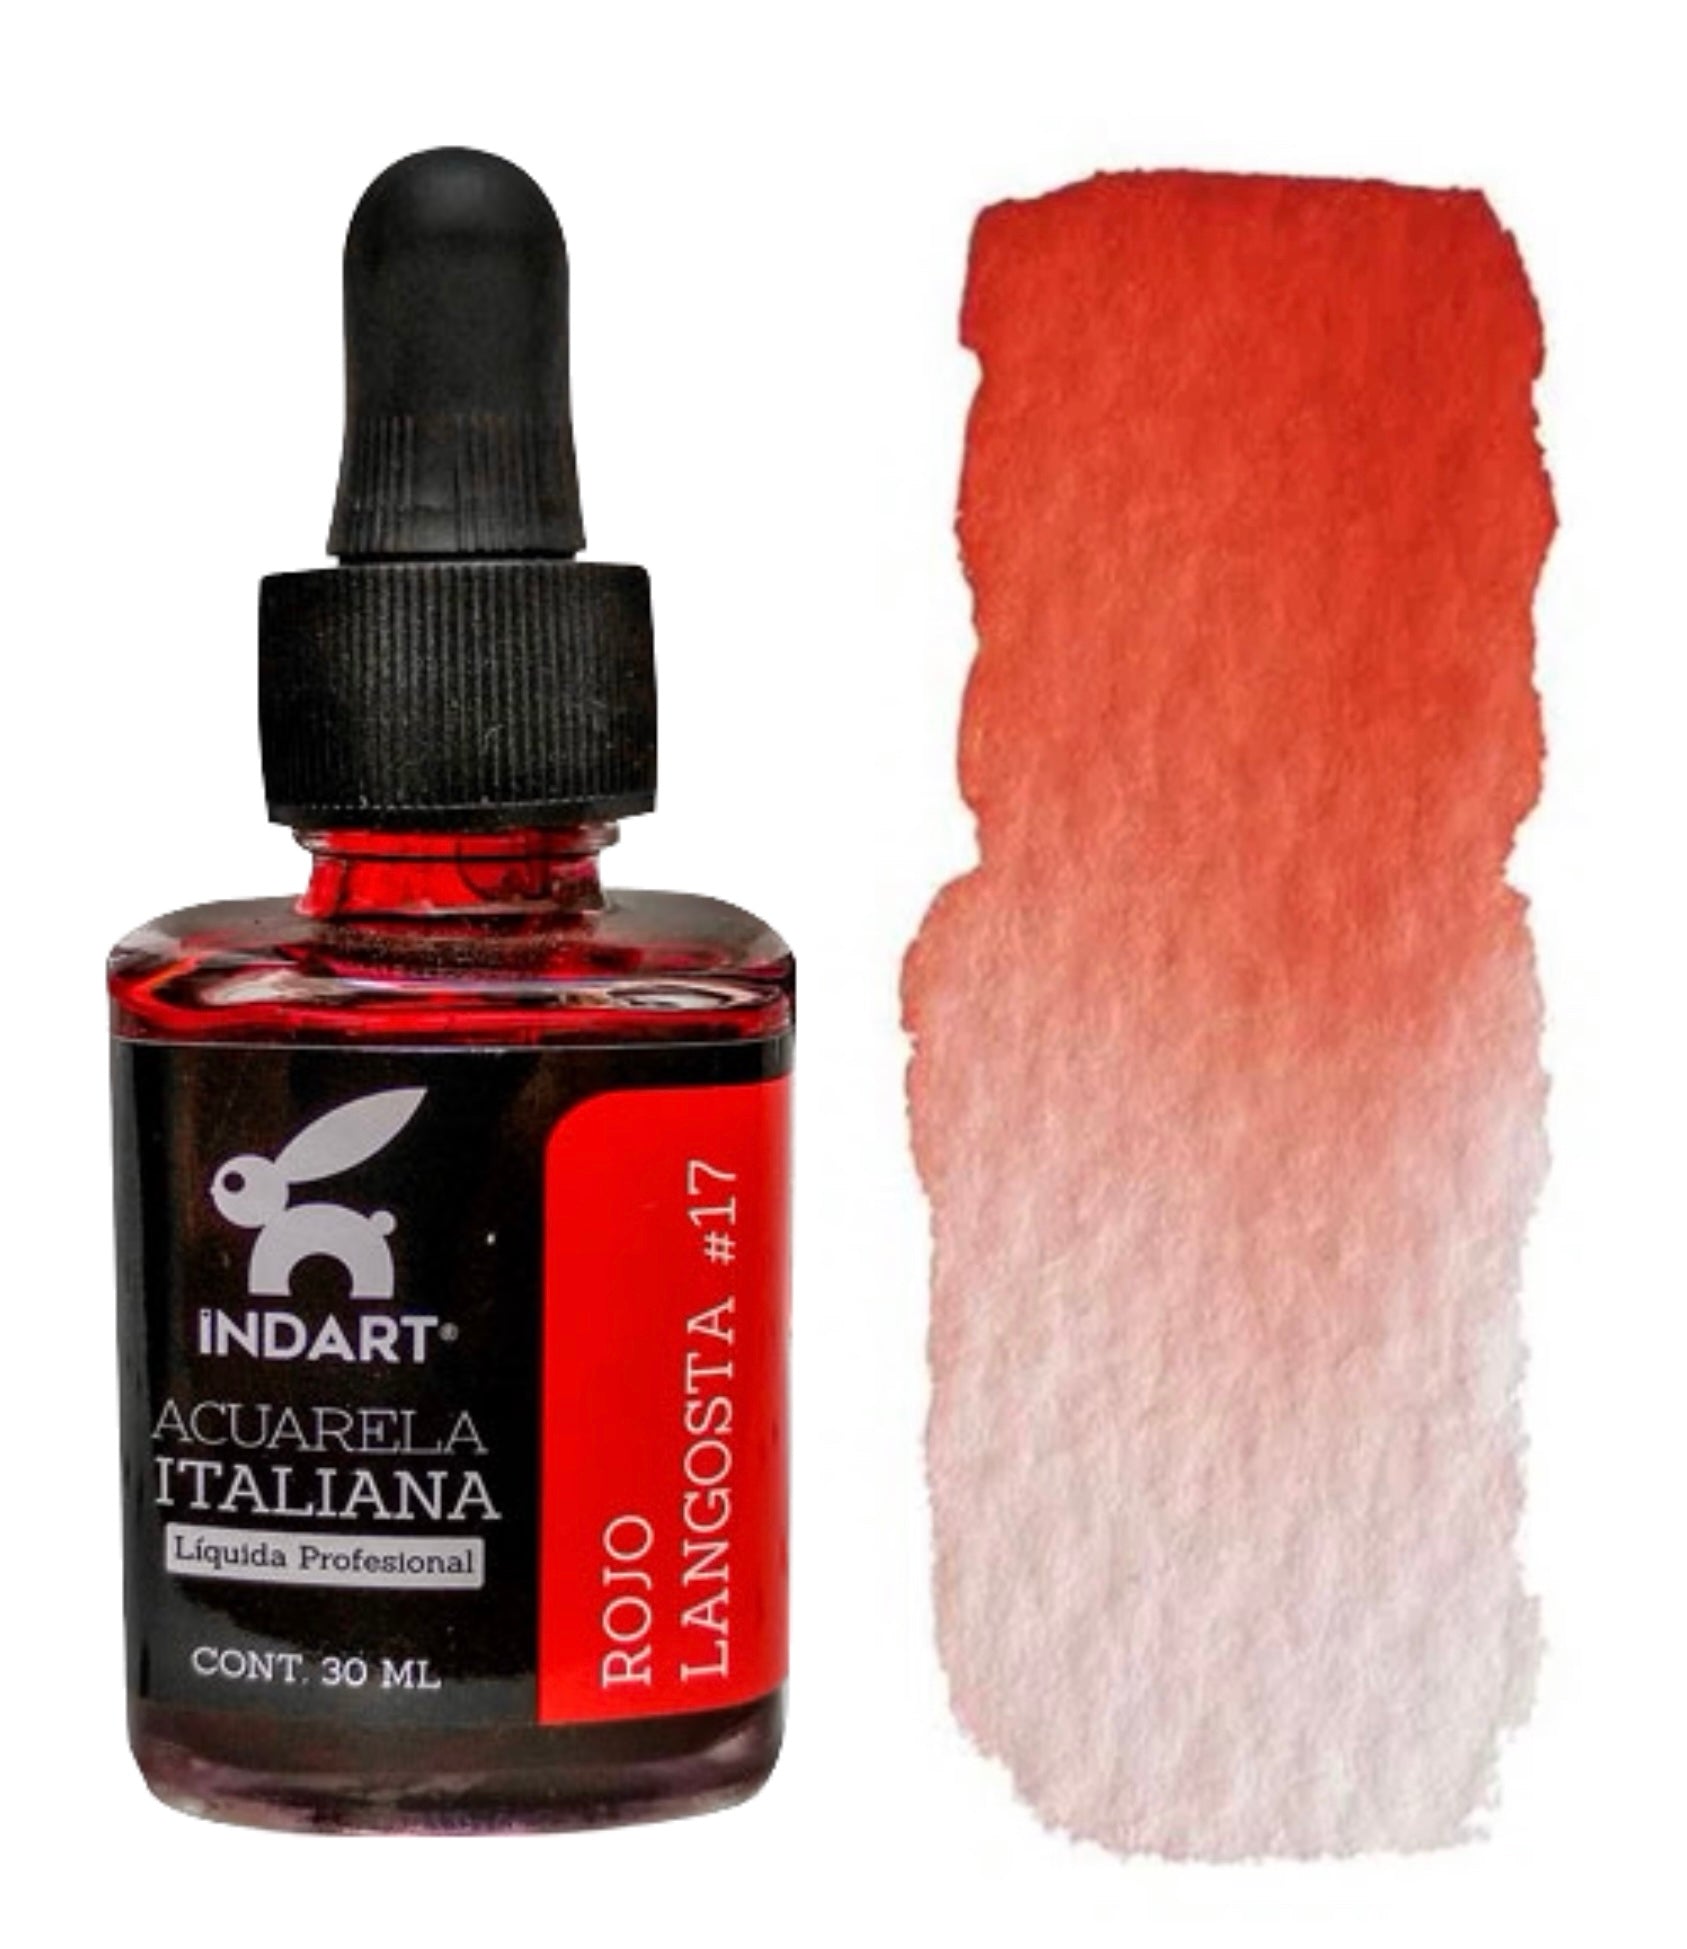 Acuarela liquida Italiana Indart Rojo Langosta 30ml